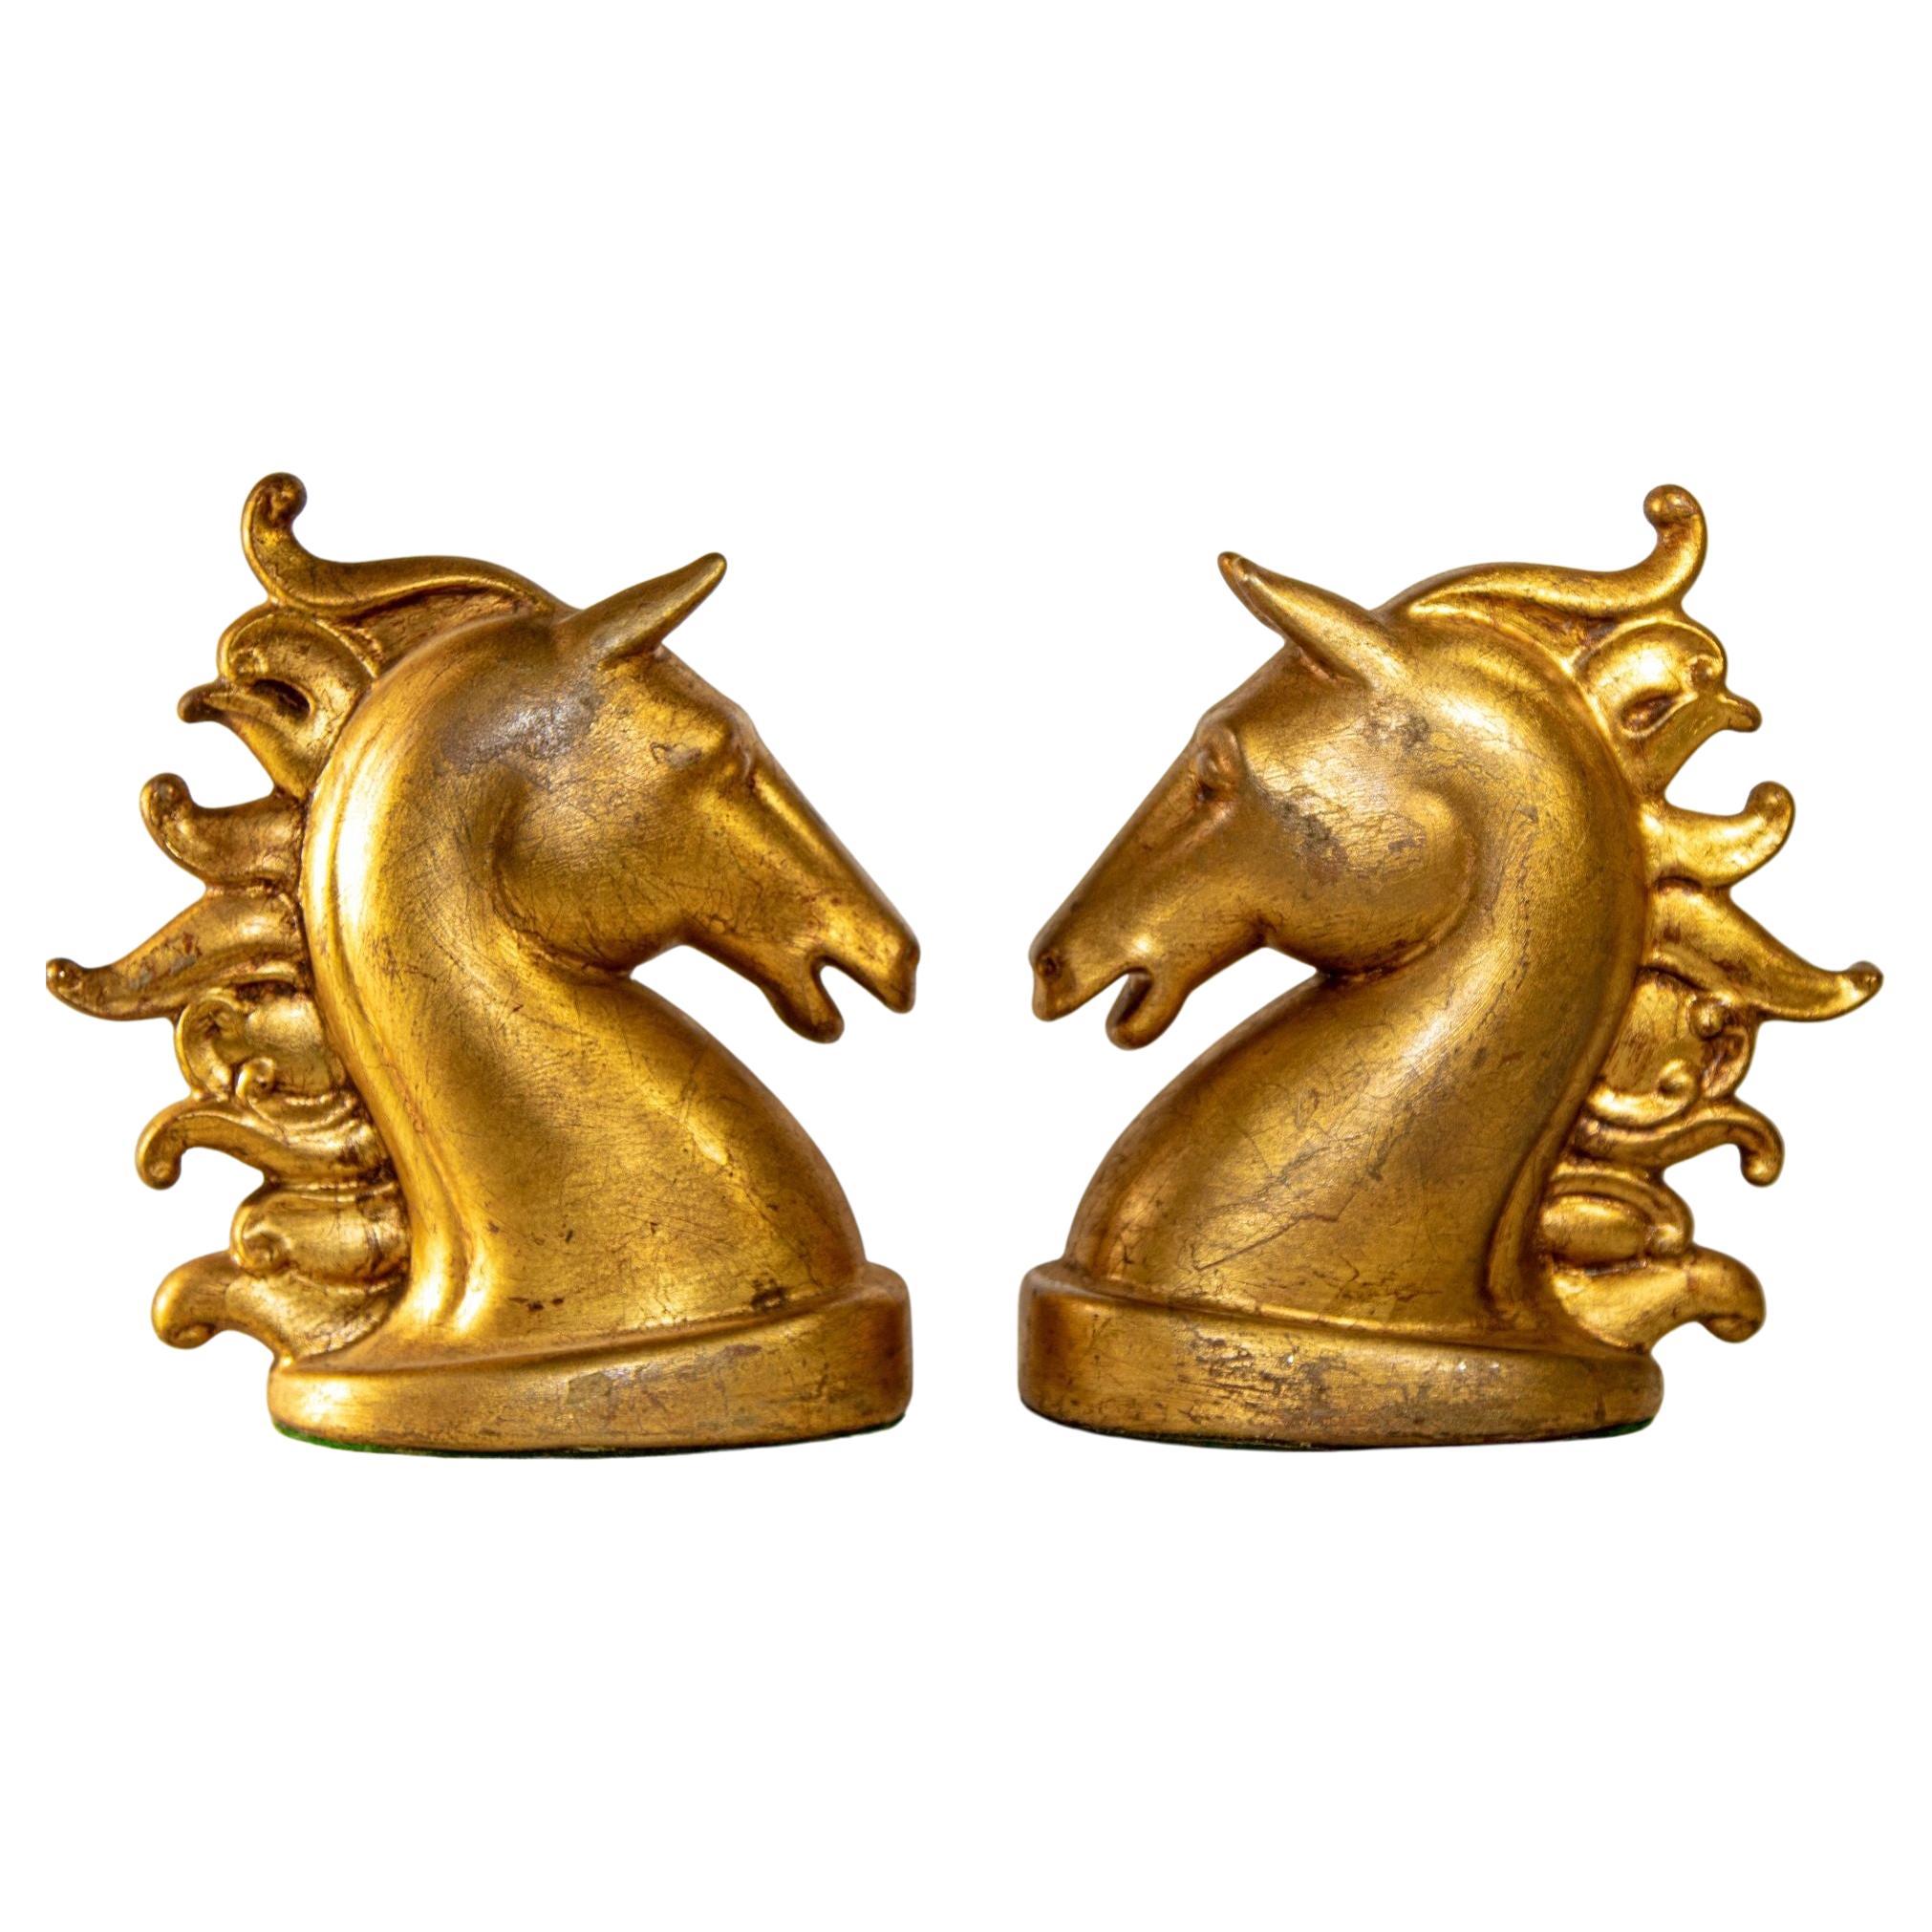 Pair of Sculptural Horse Head Gilt Bookends Art Deco 1950s Equestrian Decor